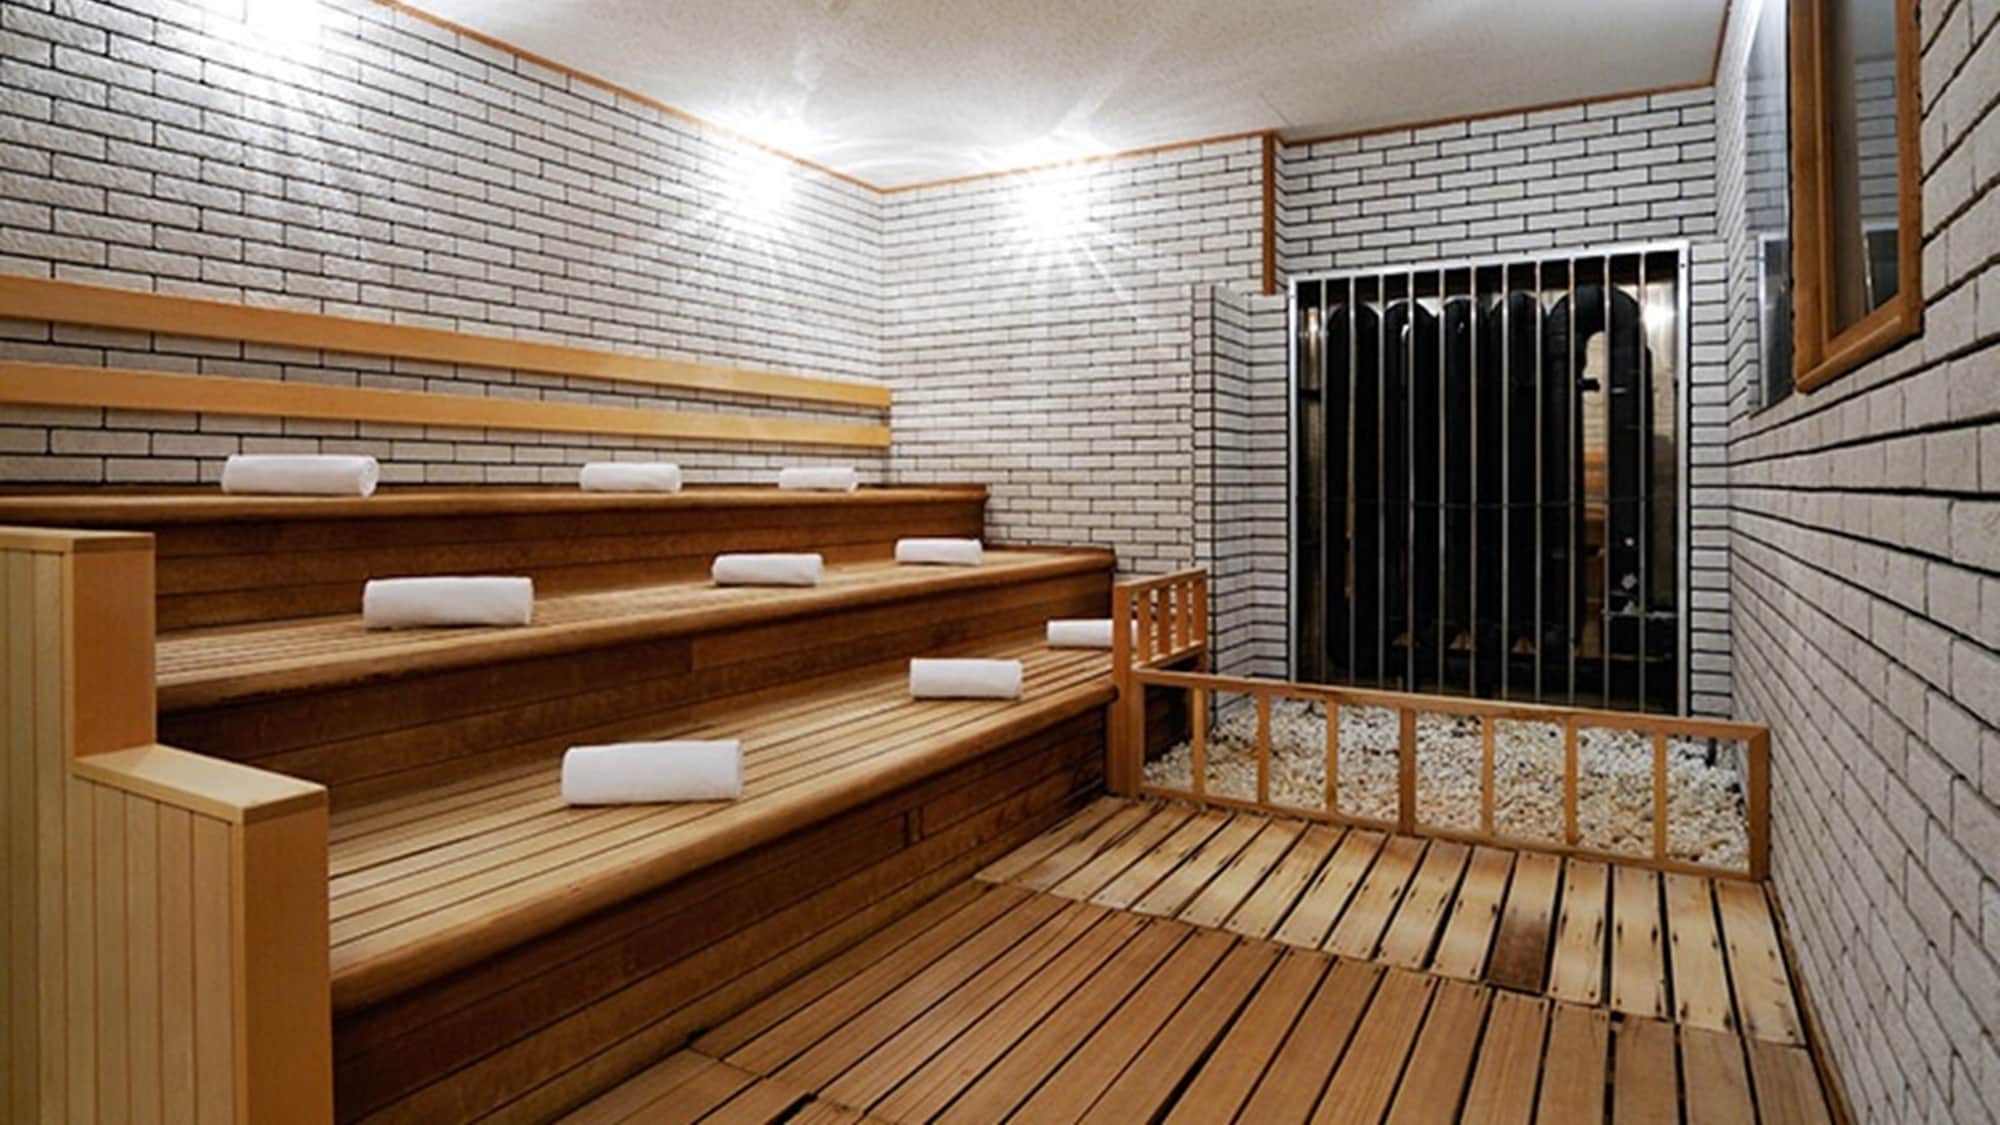 Relaxation facility "Spa Alpa" on the 1st basement floor Sauna